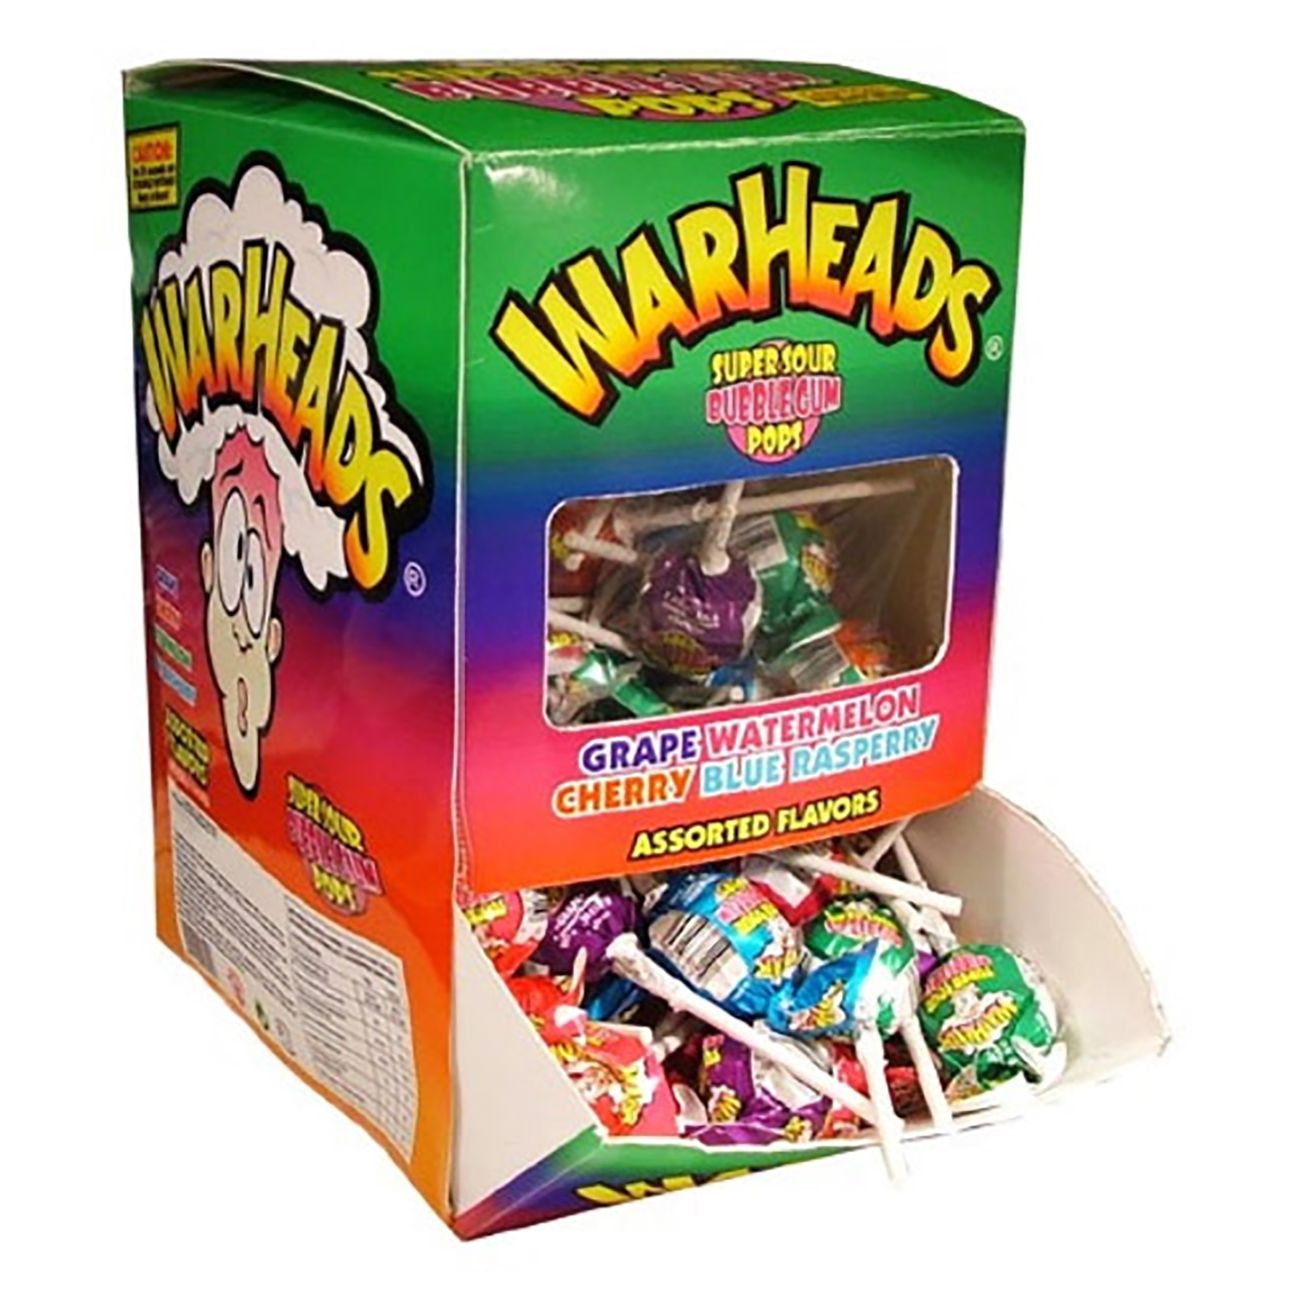 warhead-super-sour-lollies-19g-96239-1